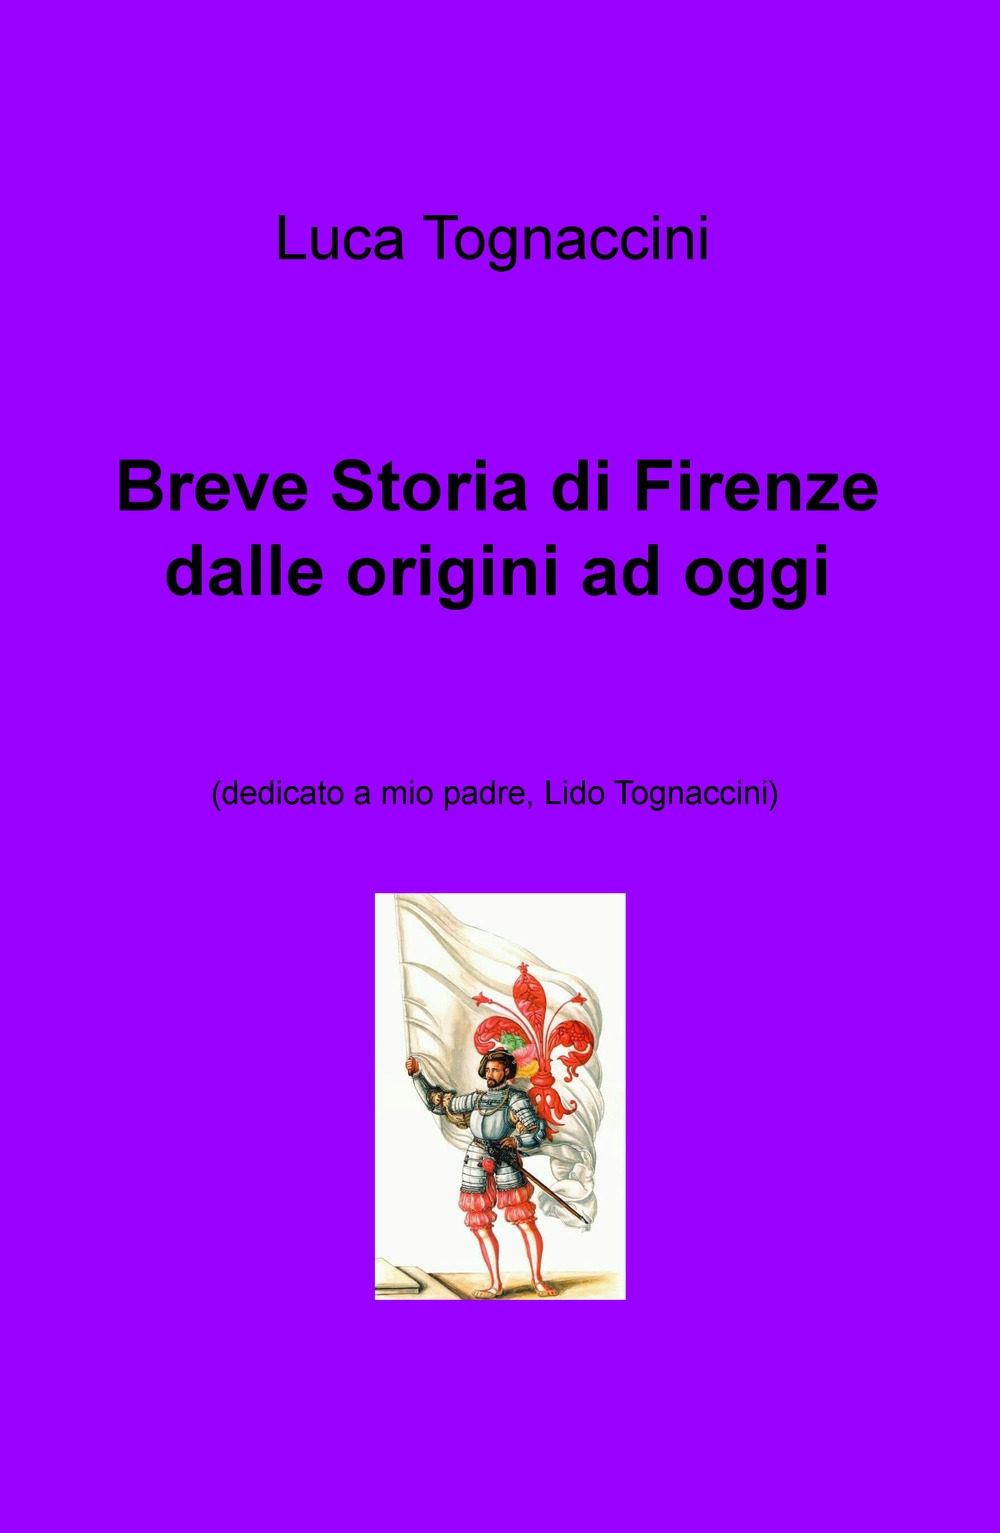 Image of Breve storia di Firenze dalle origini a oggi